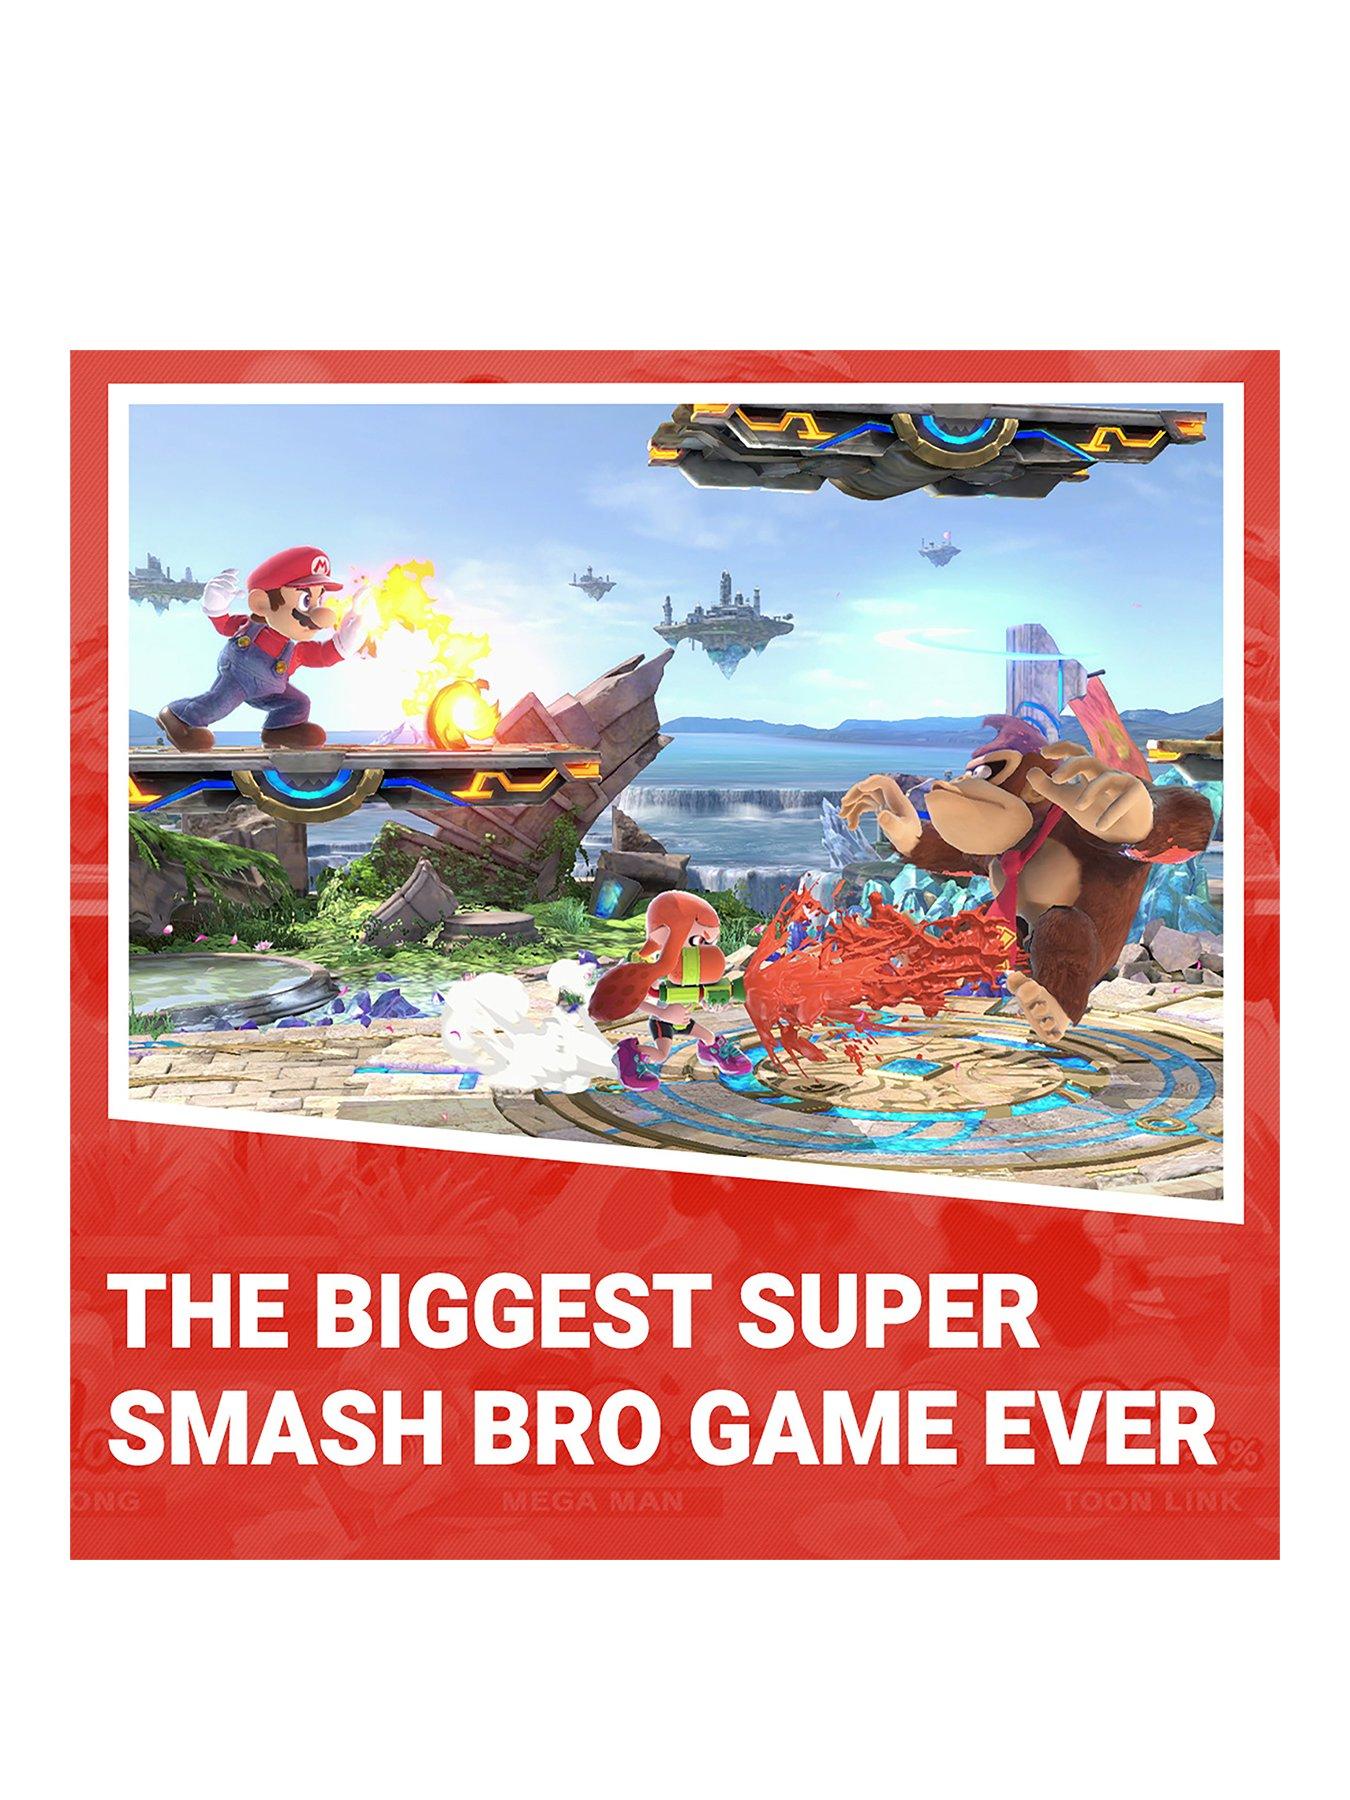 Super Smash Bros. Ultimate - [Nintendo Switch] : : Games